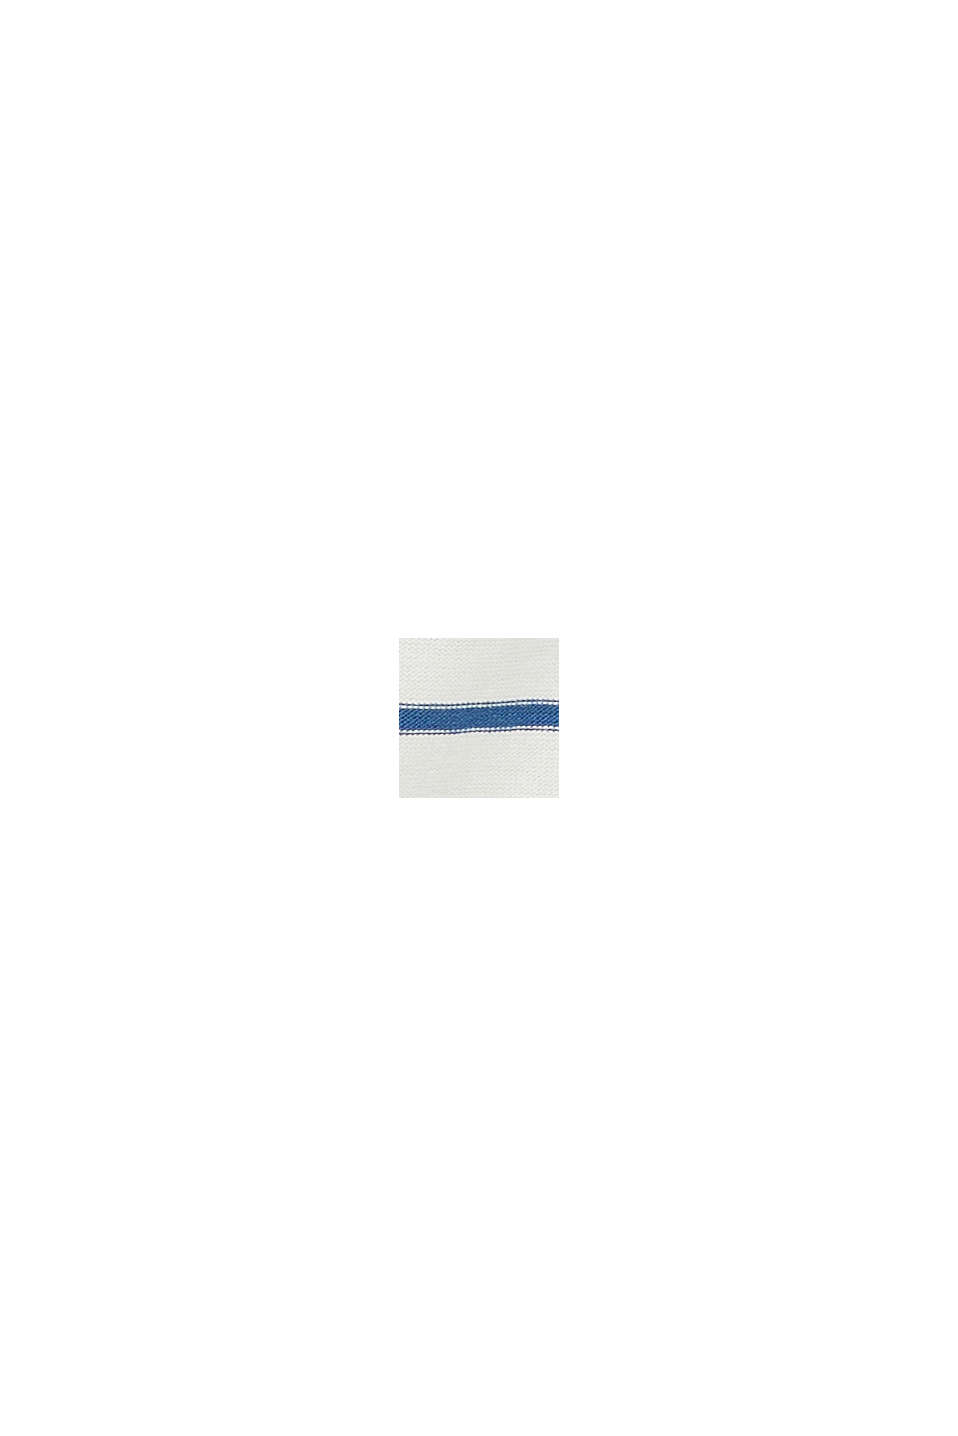 CURVY Langærmet jerseytop i økologisk bomuld, BRIGHT BLUE, swatch